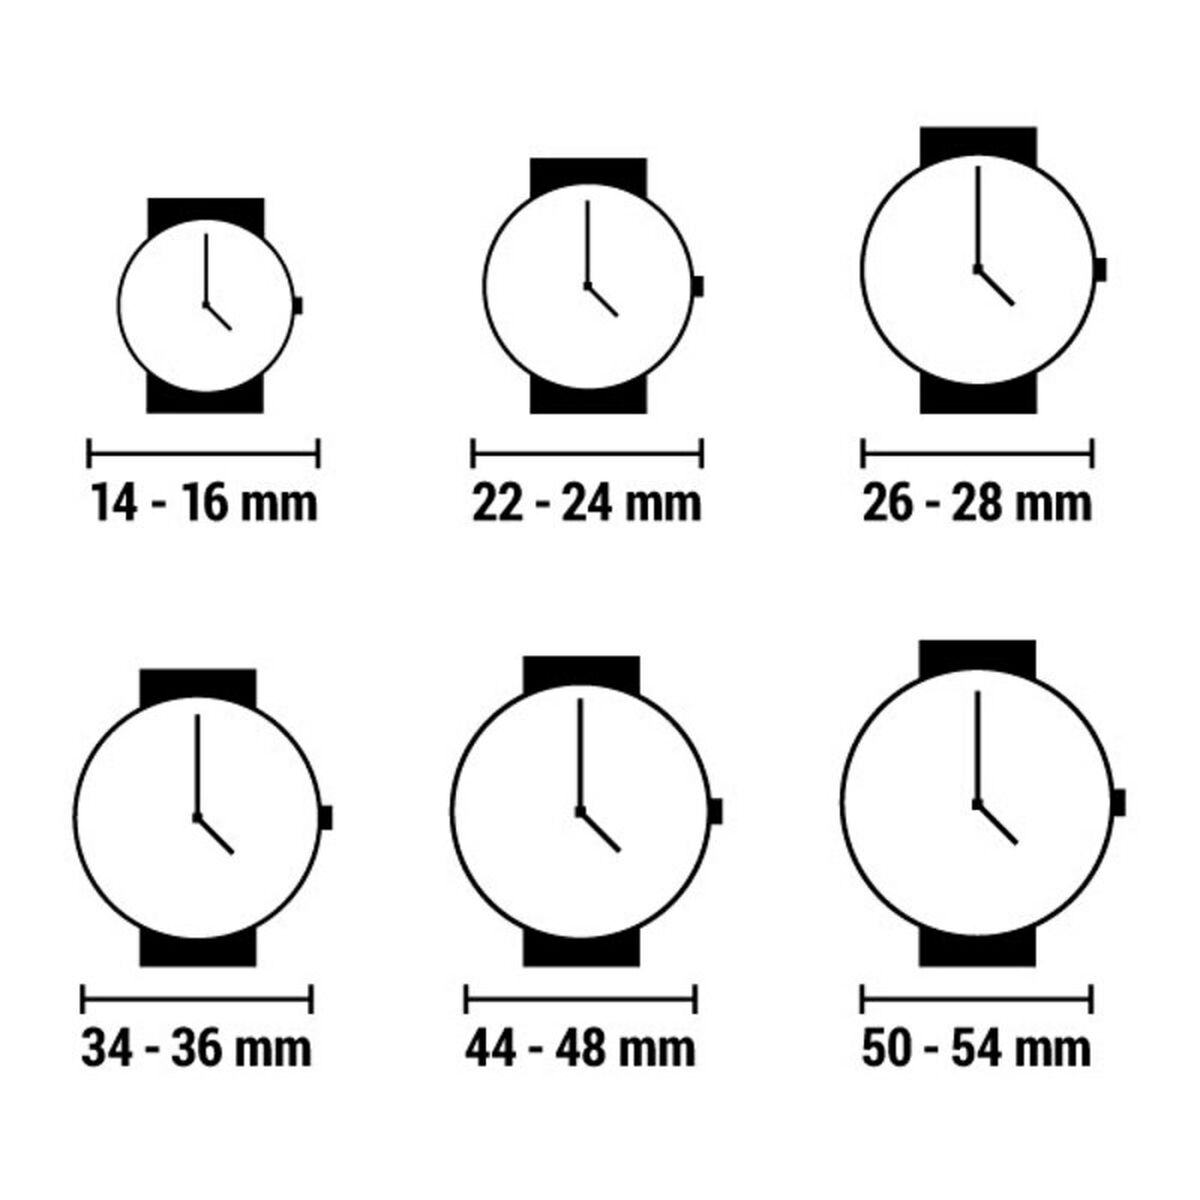 Horloge Heren Guess X76011G2S (Ø 45 mm)